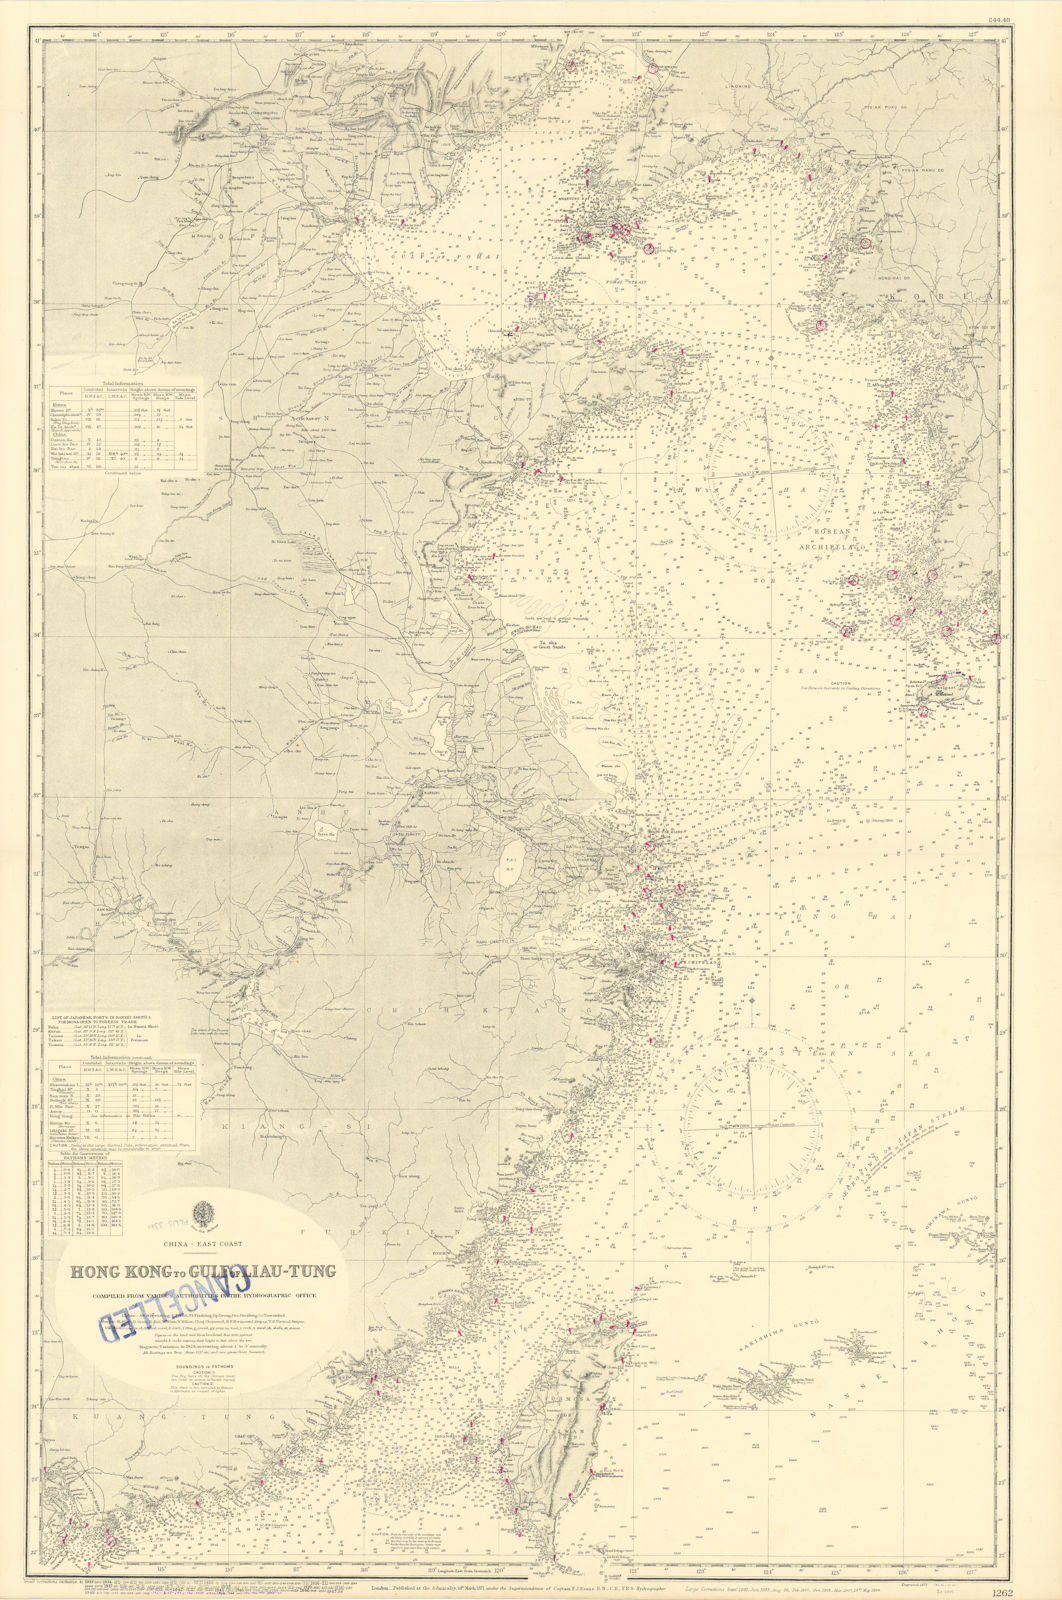 China east coast Hong Kong-Gulf of Liau-Tung ADMIRALTY sea chart 1877 (1955) map